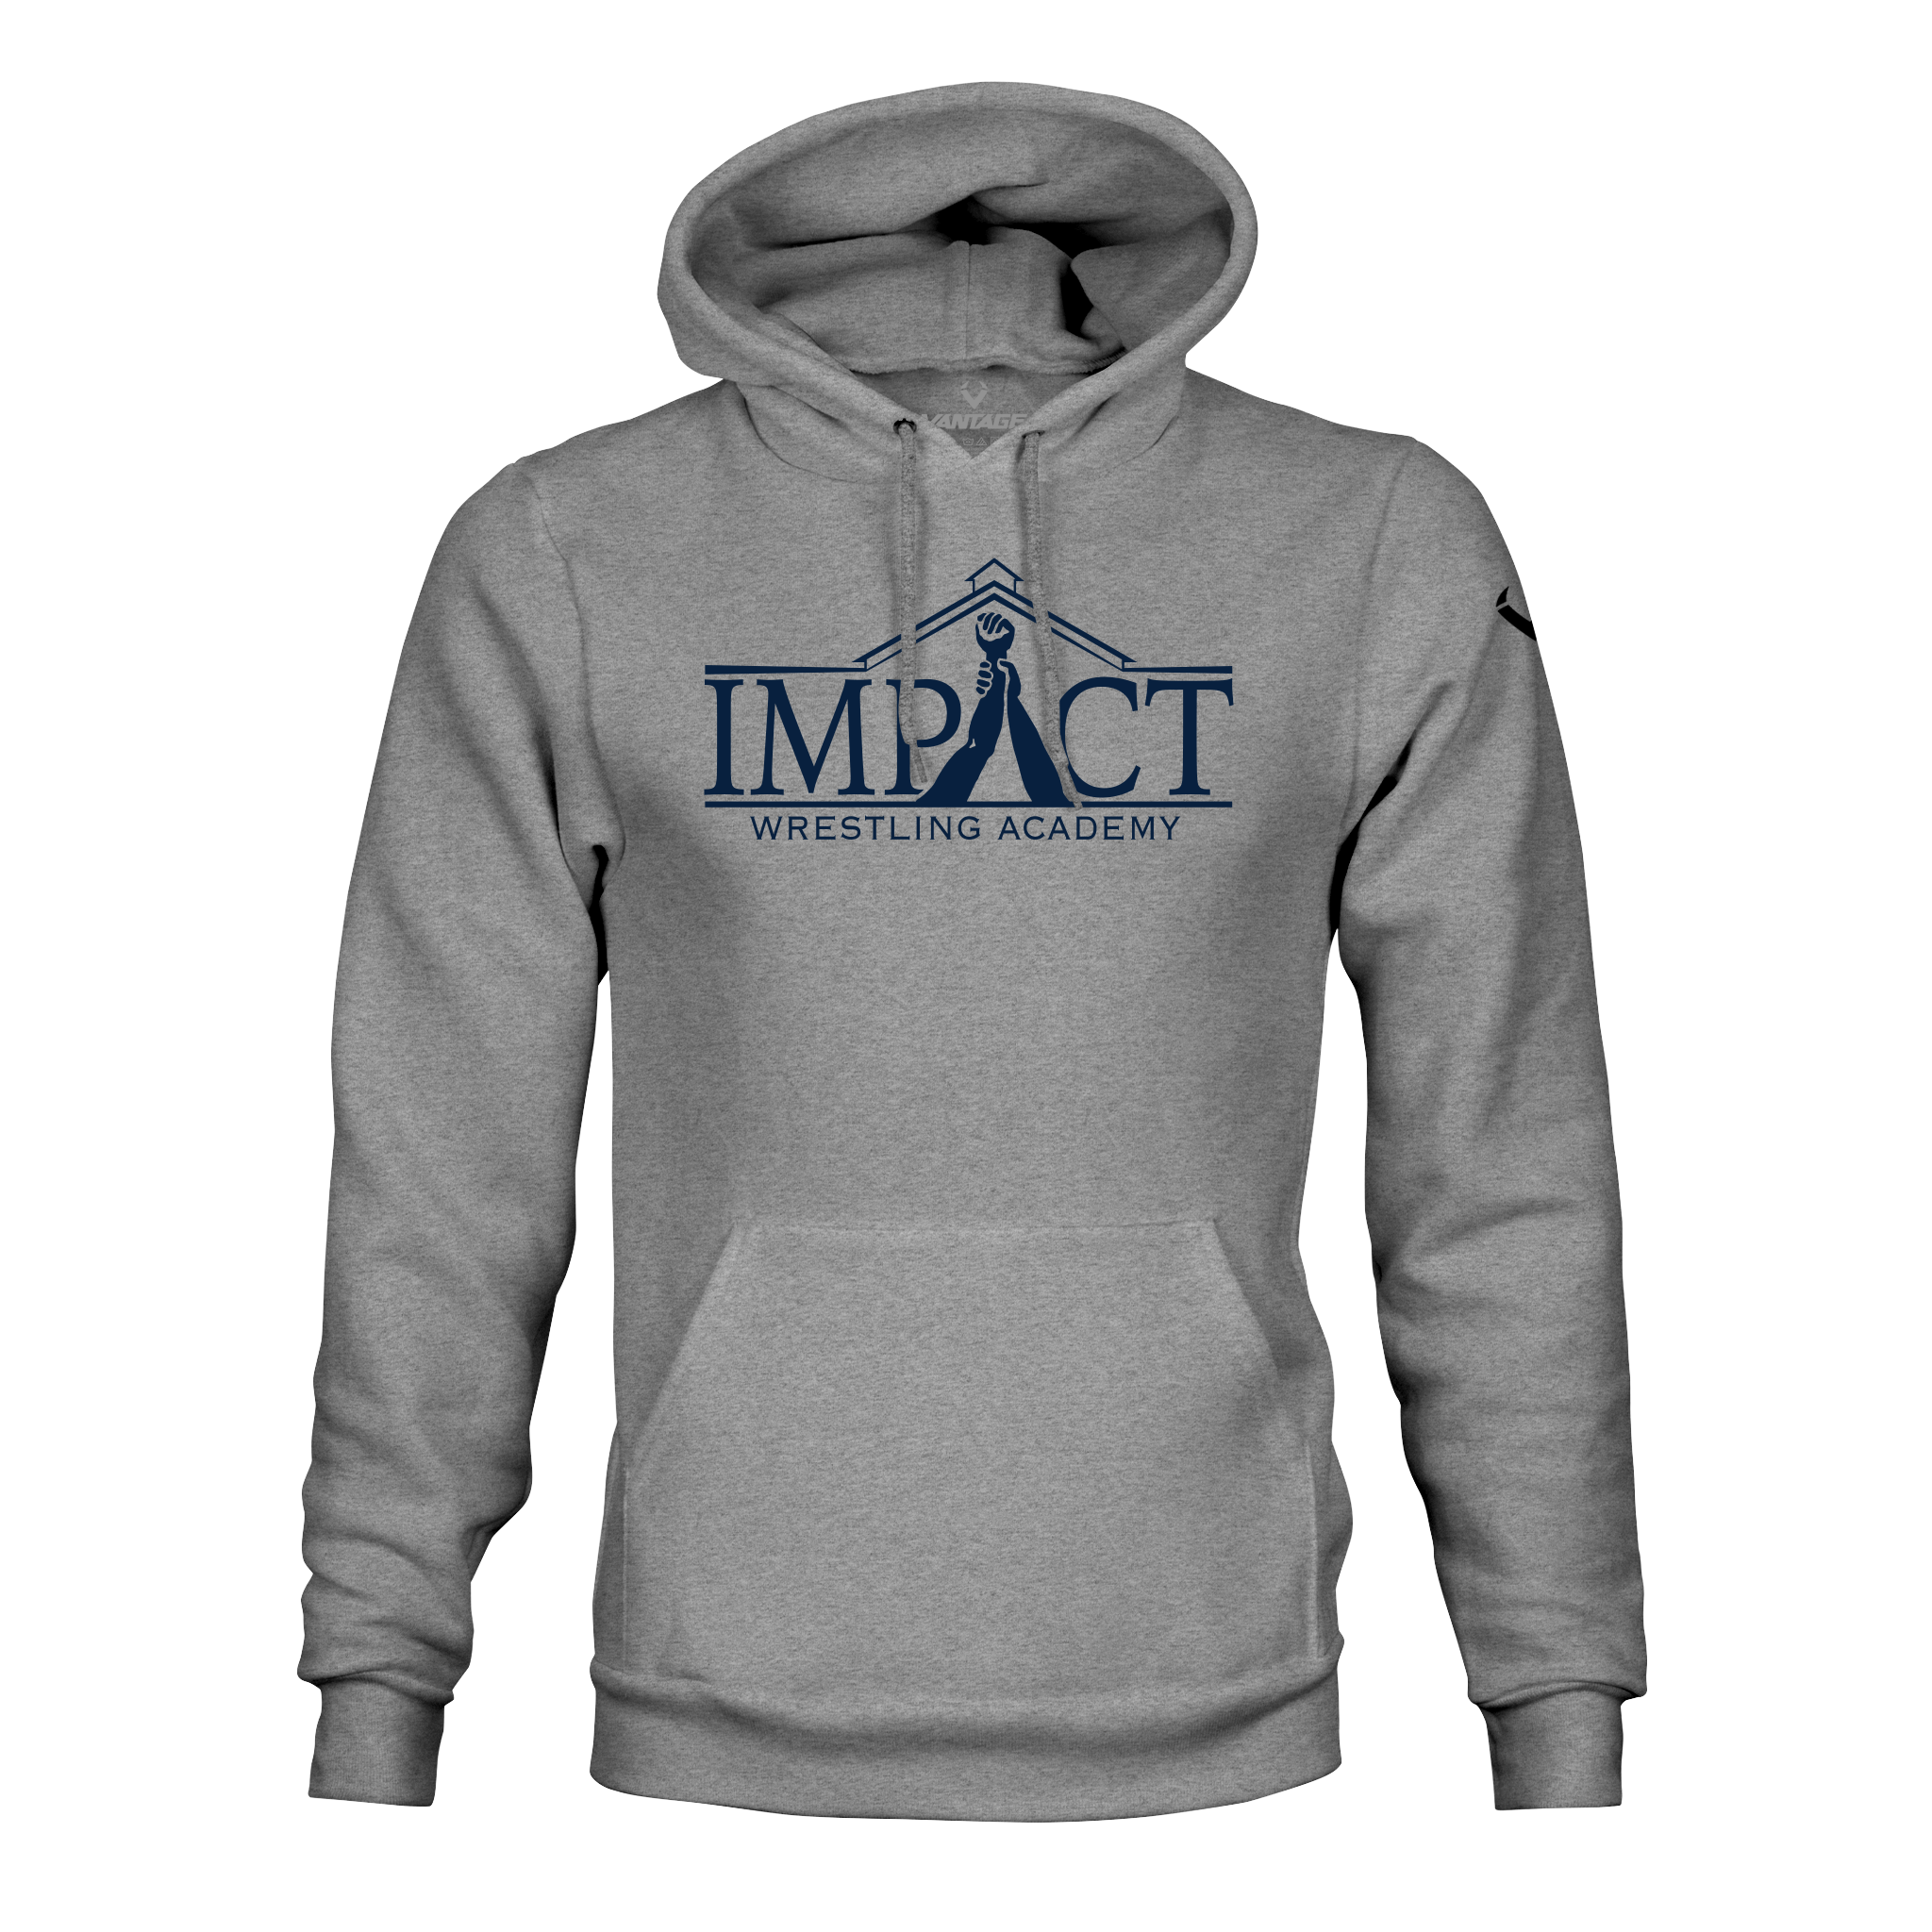 Impact Wrestling Academy -  Midweight Hoodie